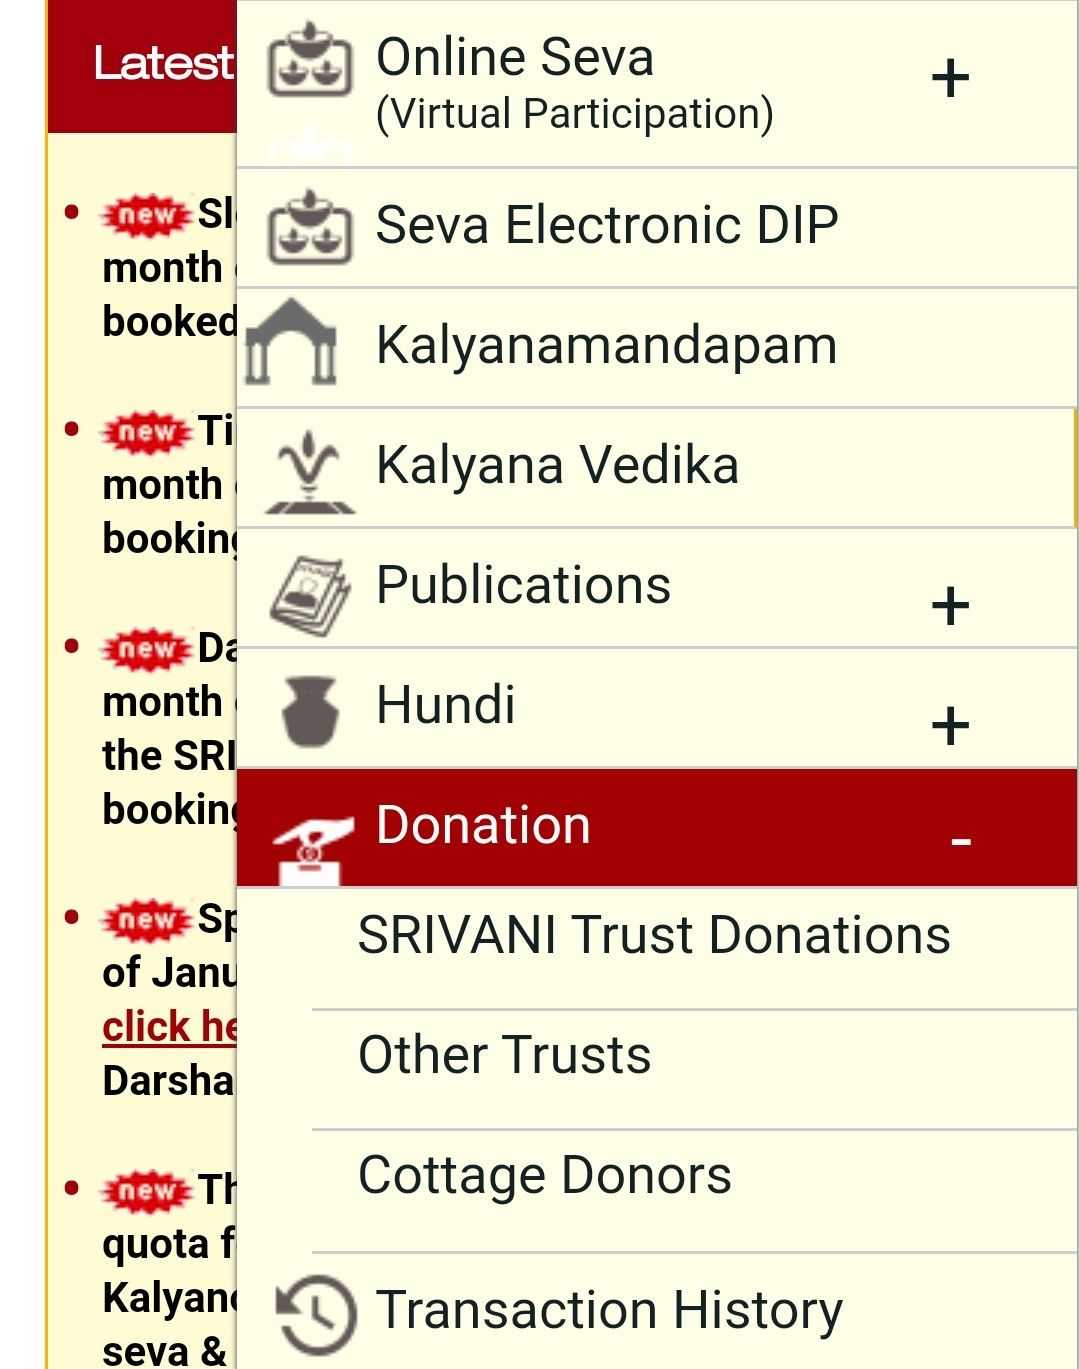 SRIVANI Trust Donations